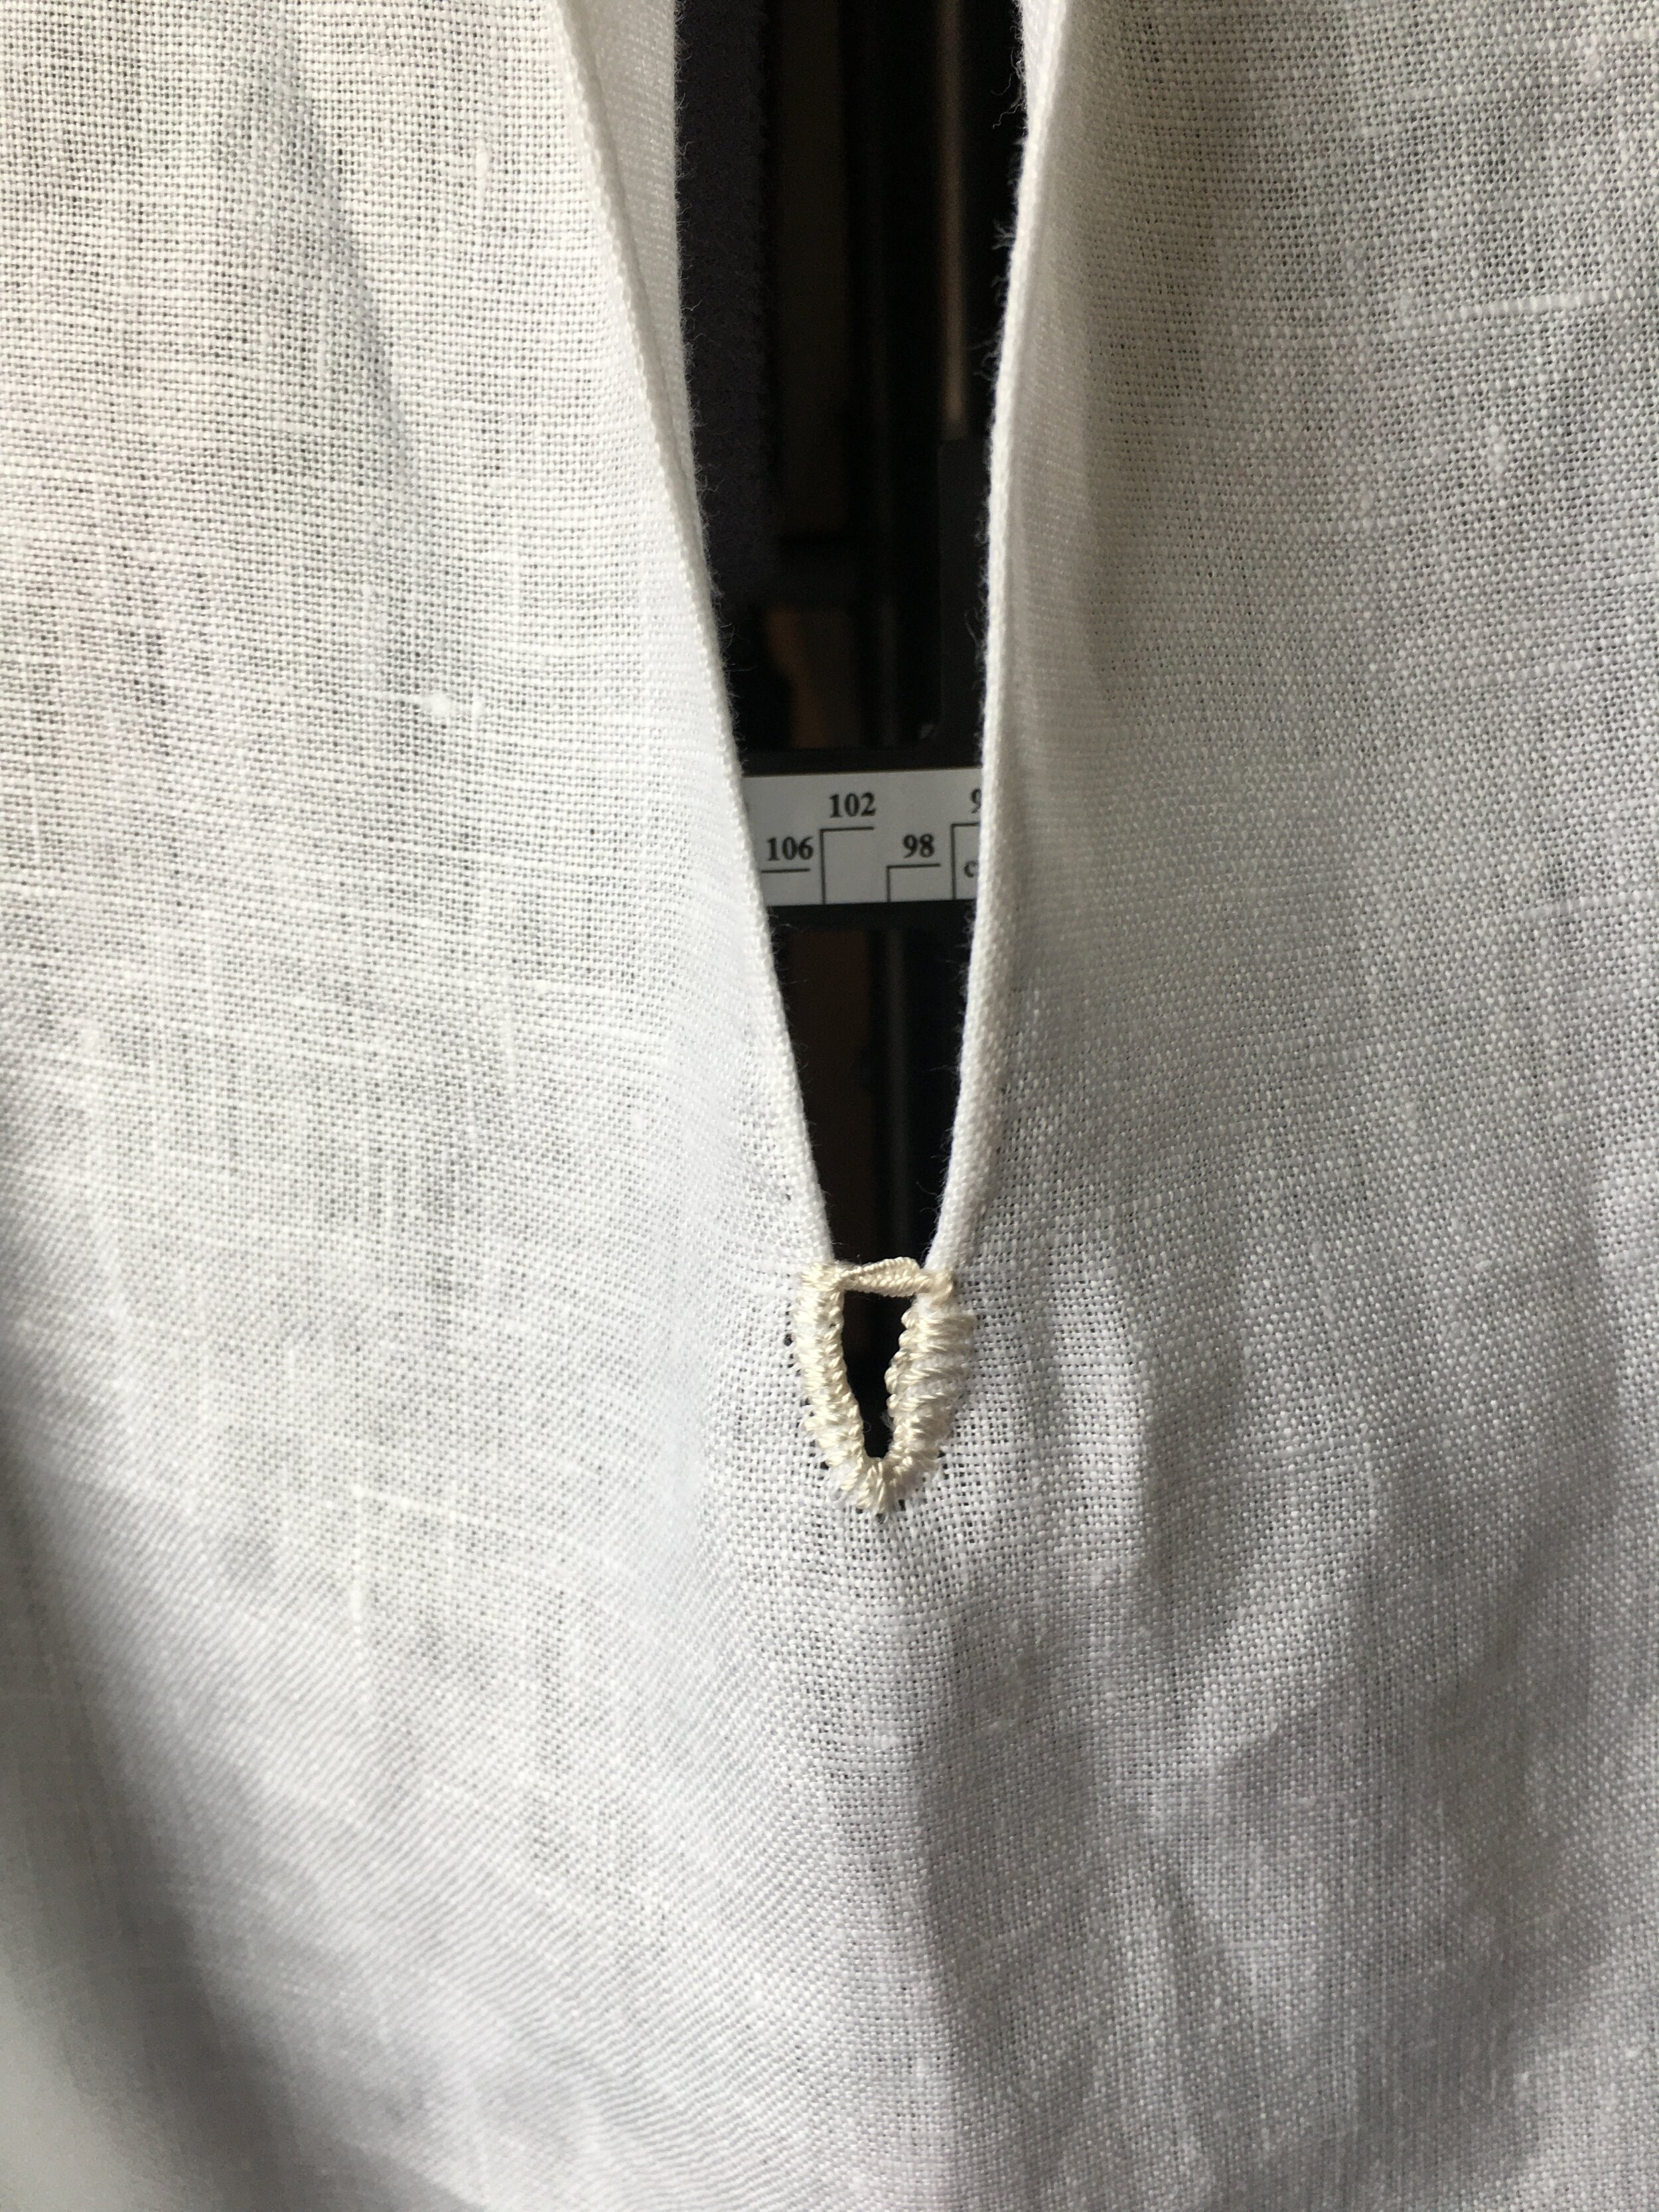 Neck detail on shirt/shift